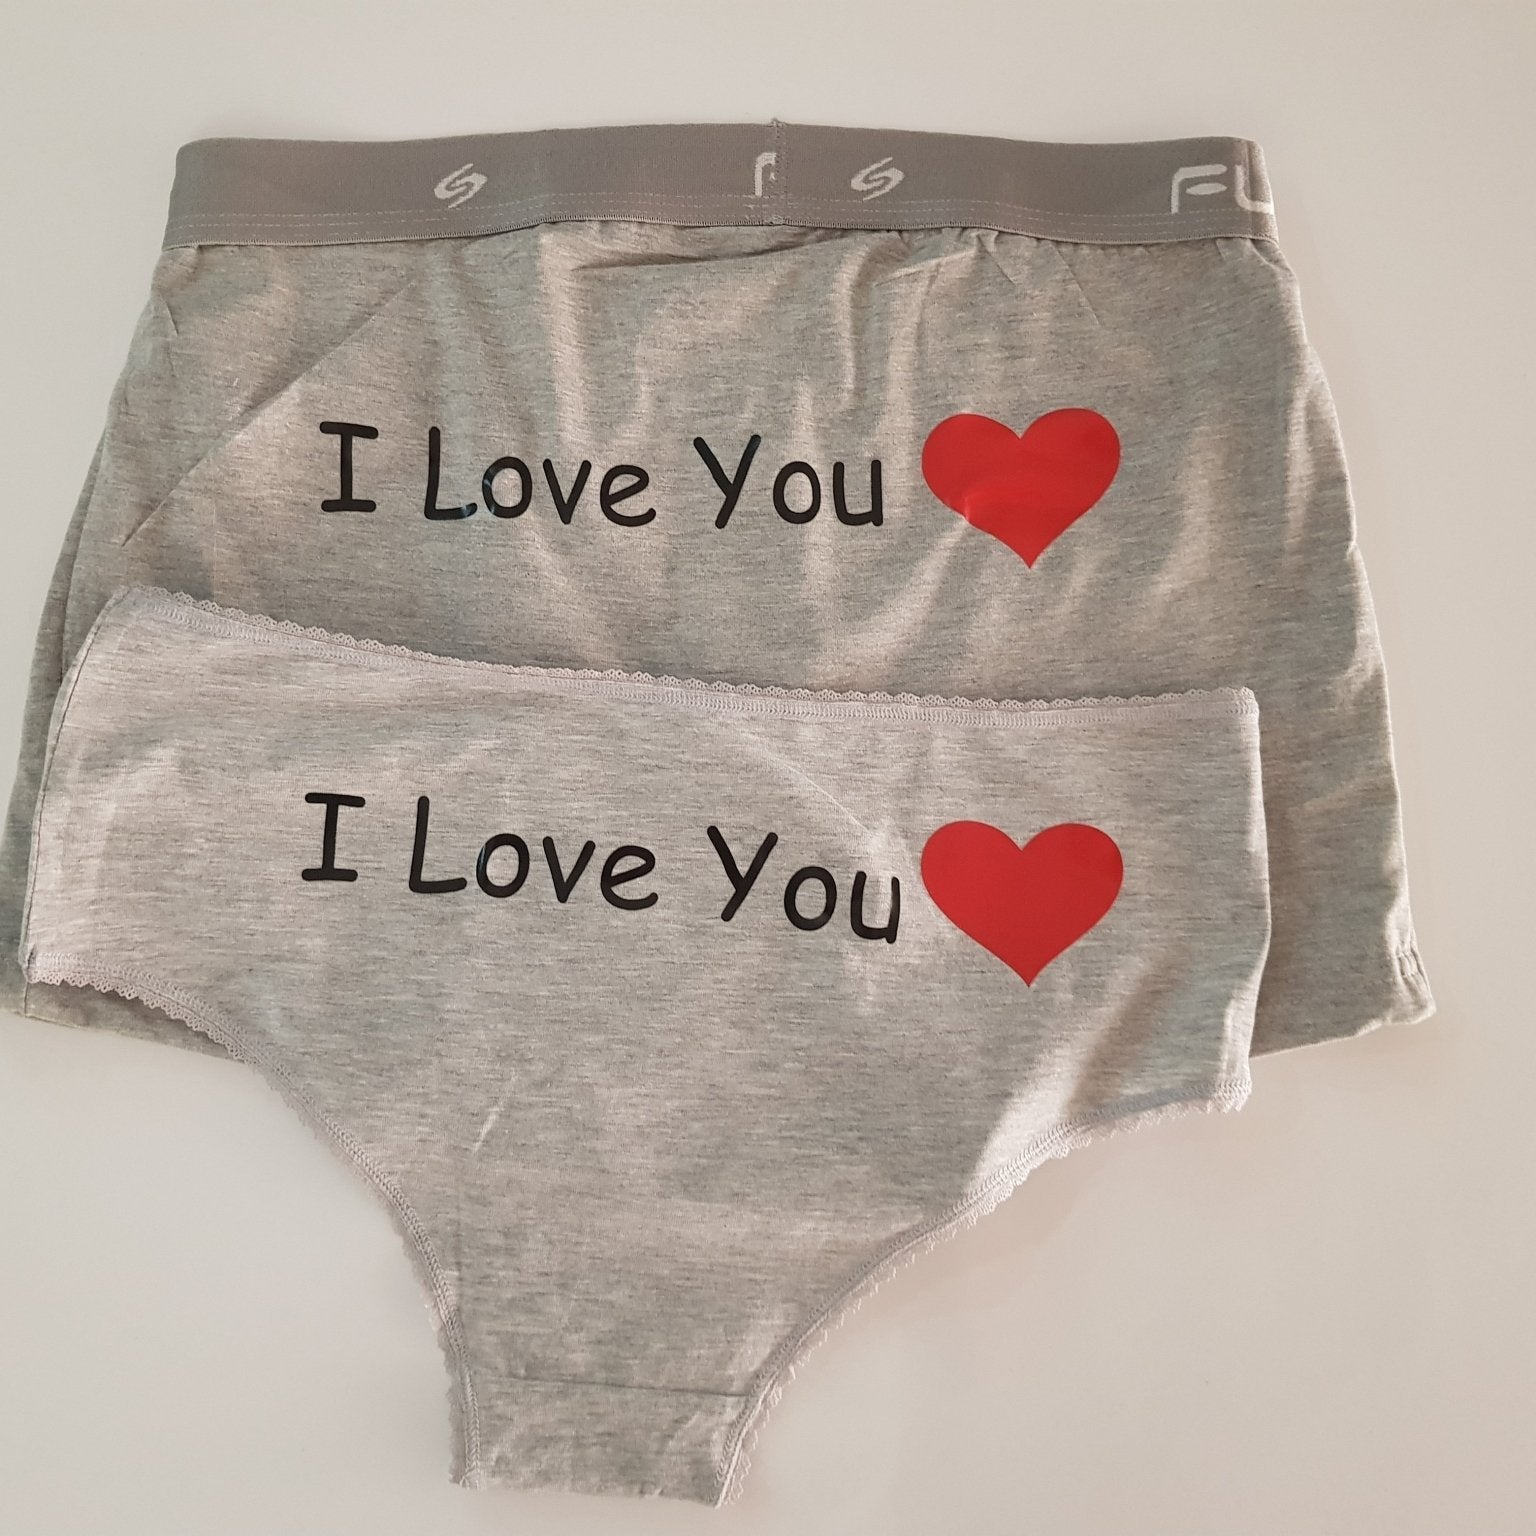 Couple underwear - I Love You - Etba3lly